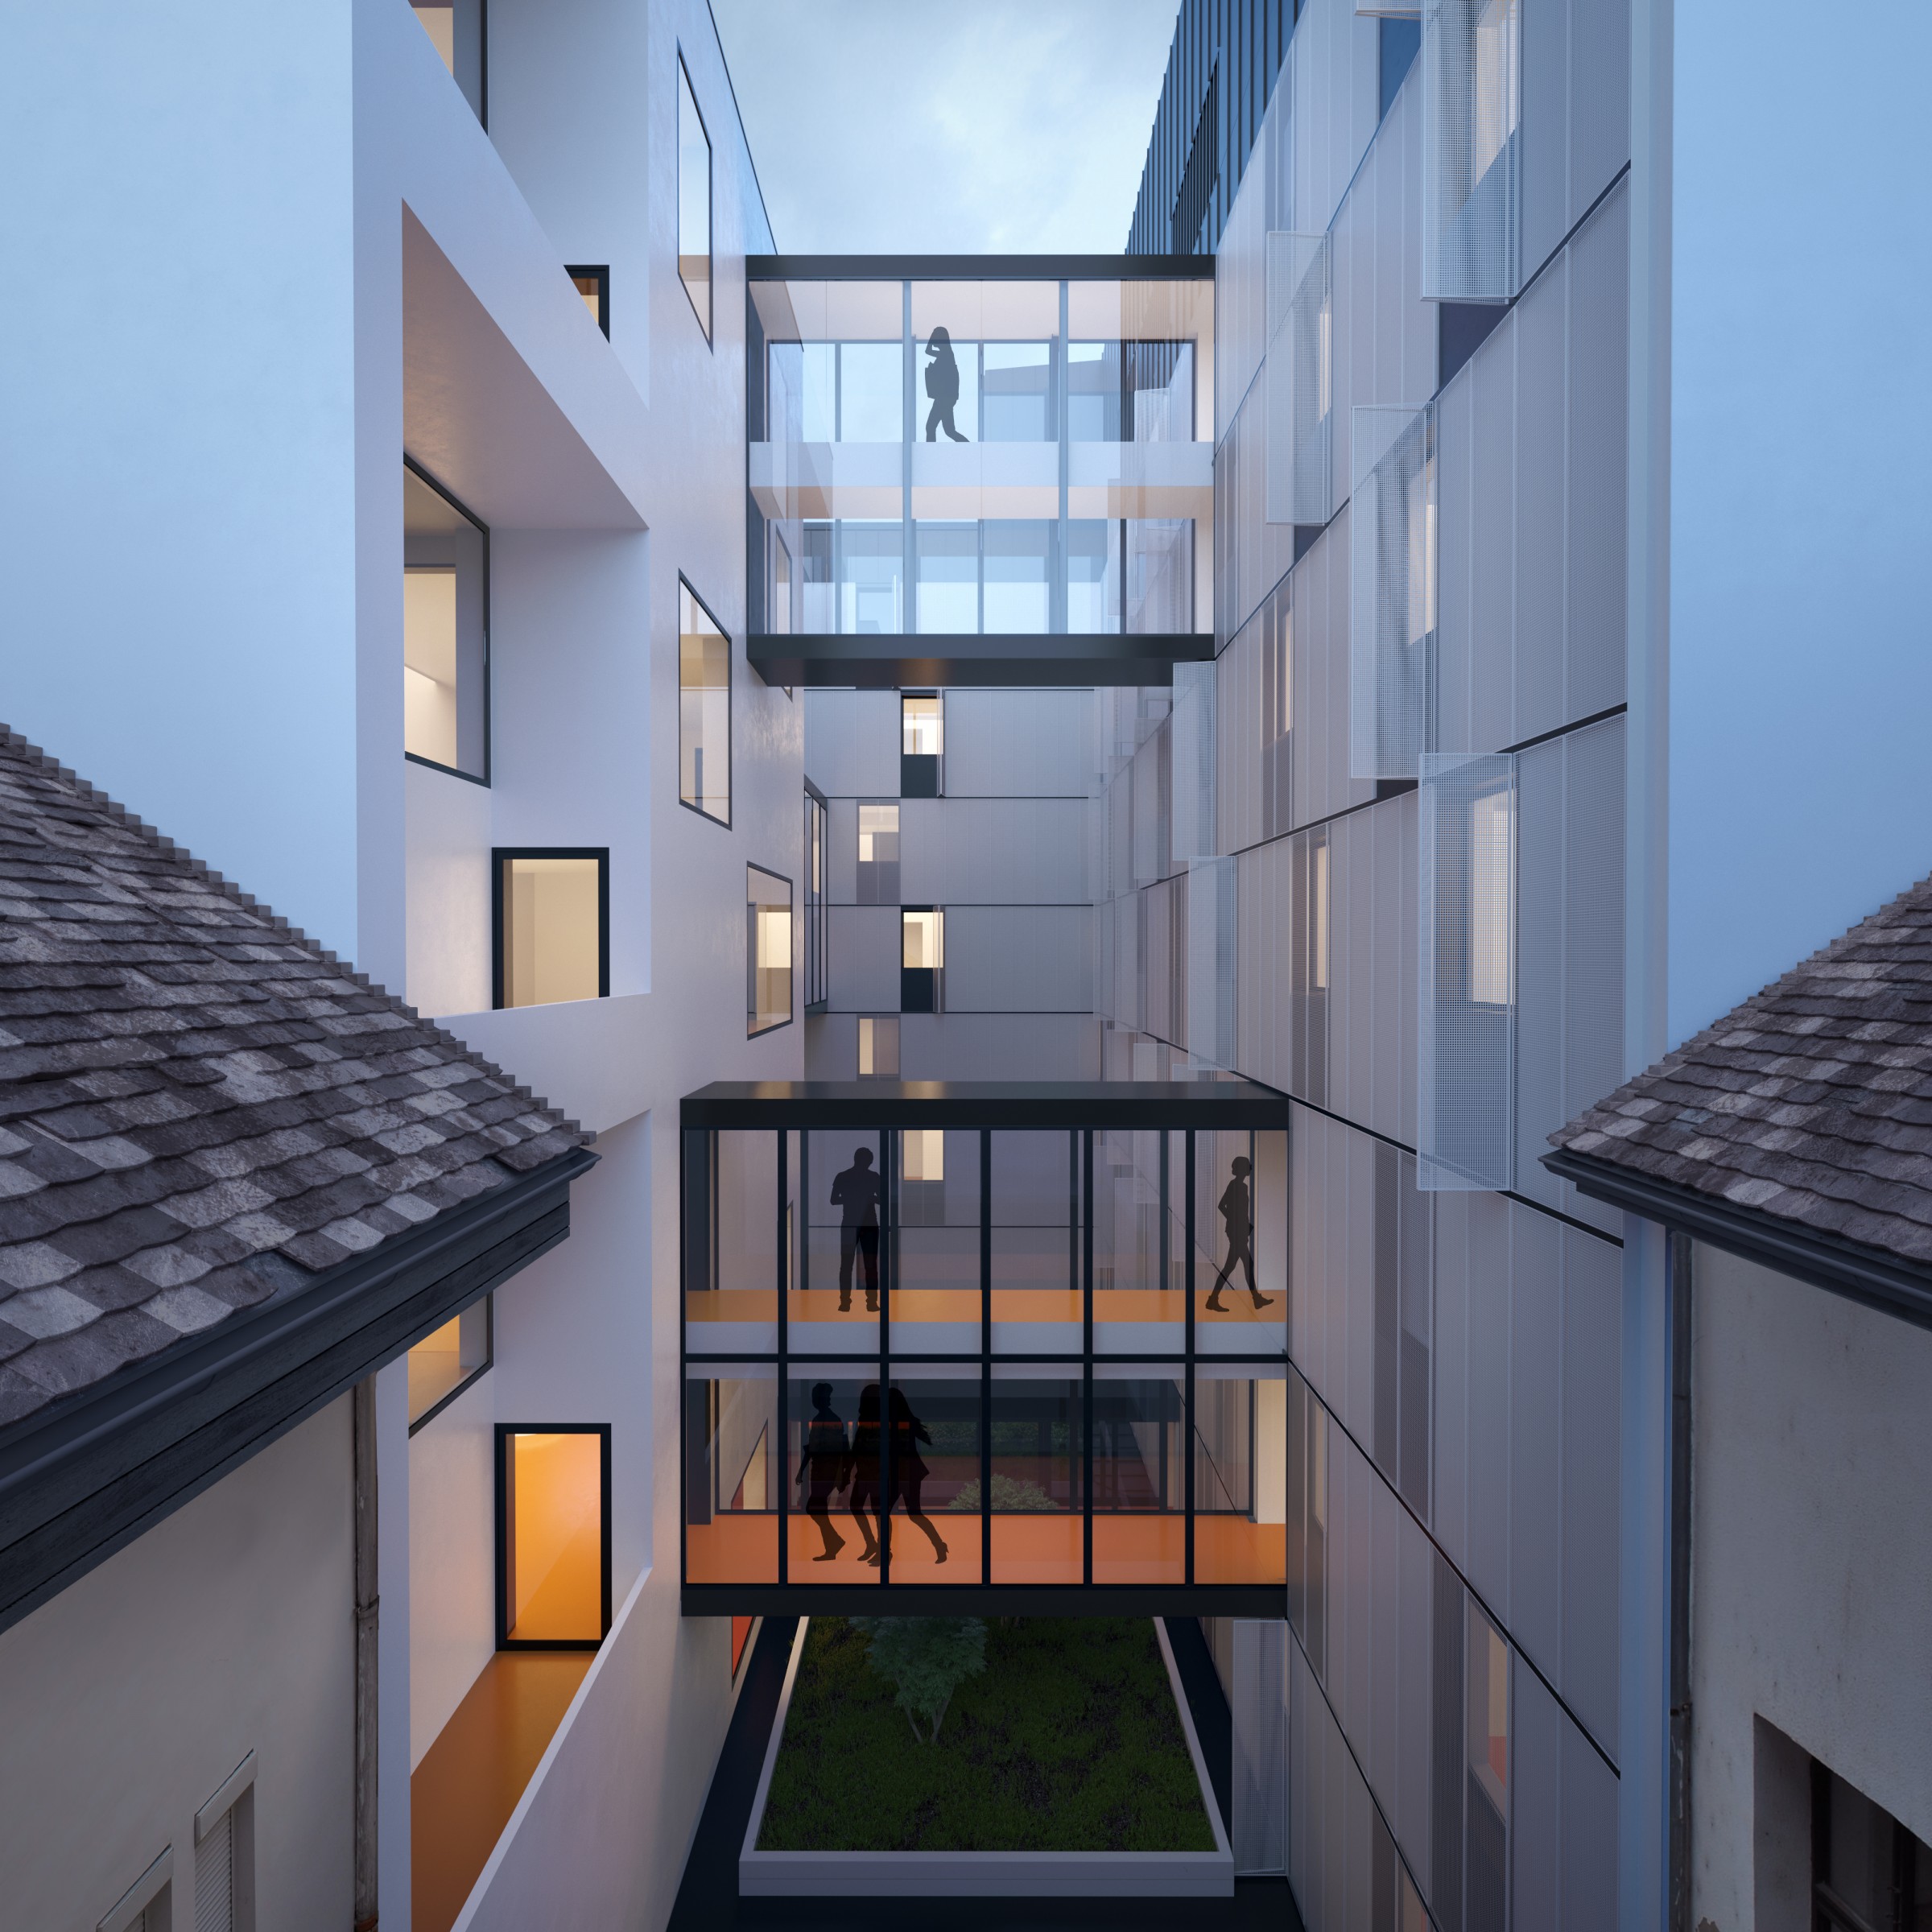 Unique spatial milieu – Winner of the Corvinus dormitory design competition